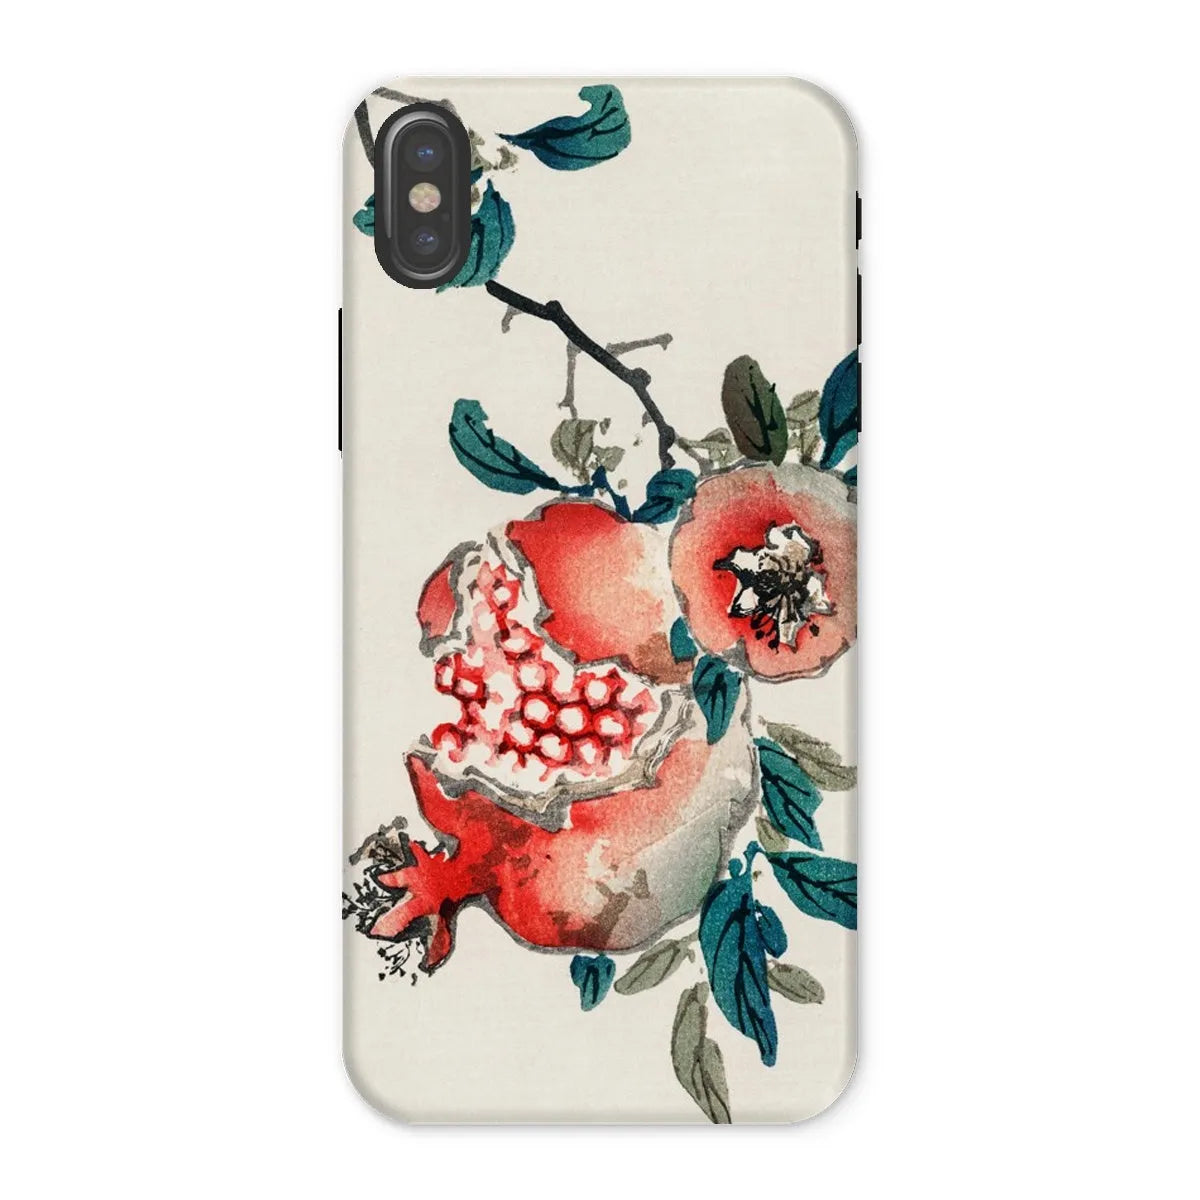 Pomegranate - Meiji Period Ukiyo-e Phone Case - Kōno Bairei - Iphone x / Matte - Mobile Phone Cases - Aesthetic Art